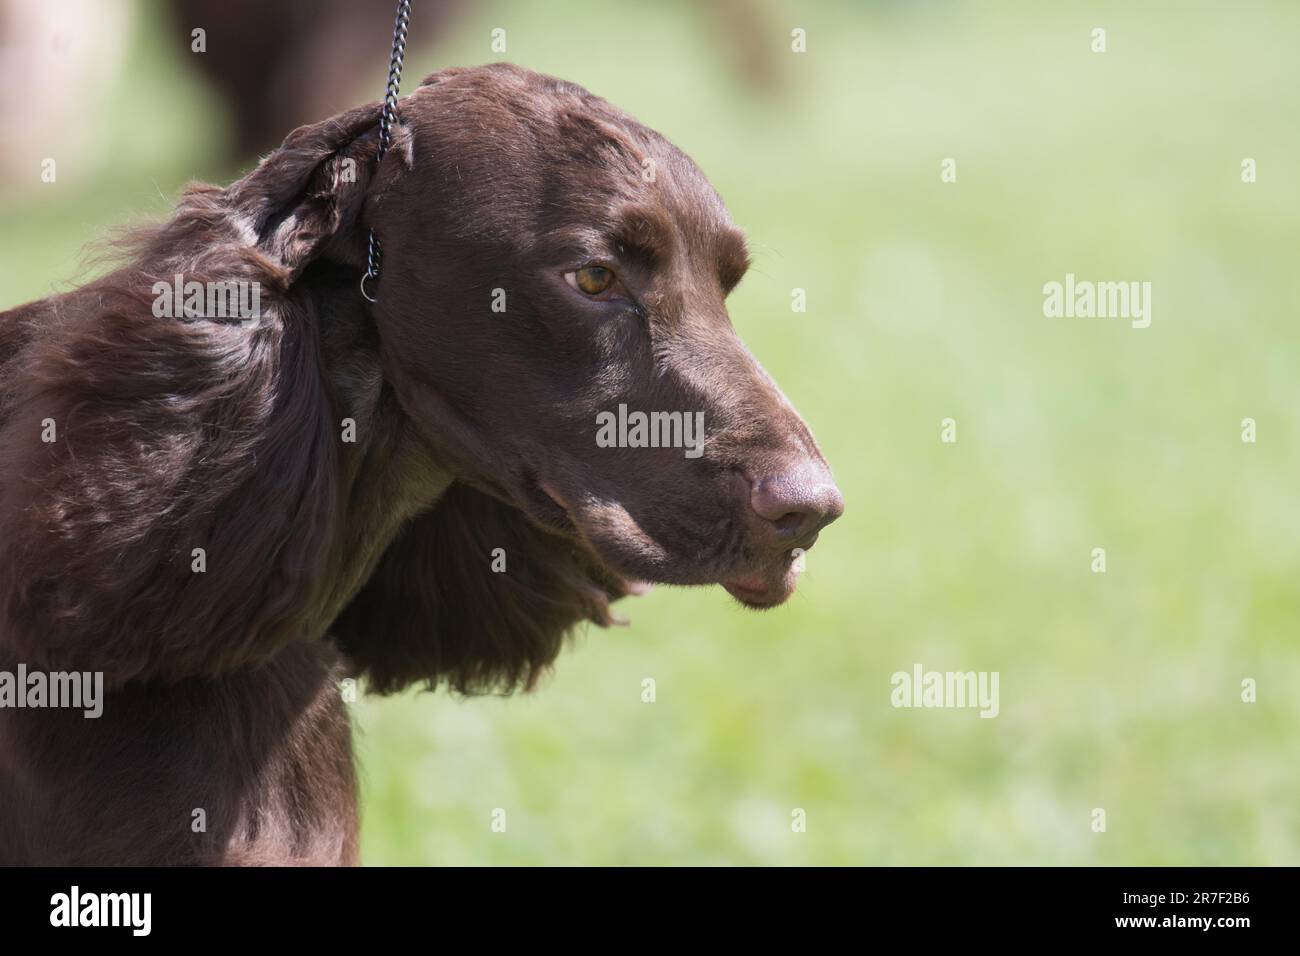 Field Spaniel close-up portrait in profile view Stock Photo